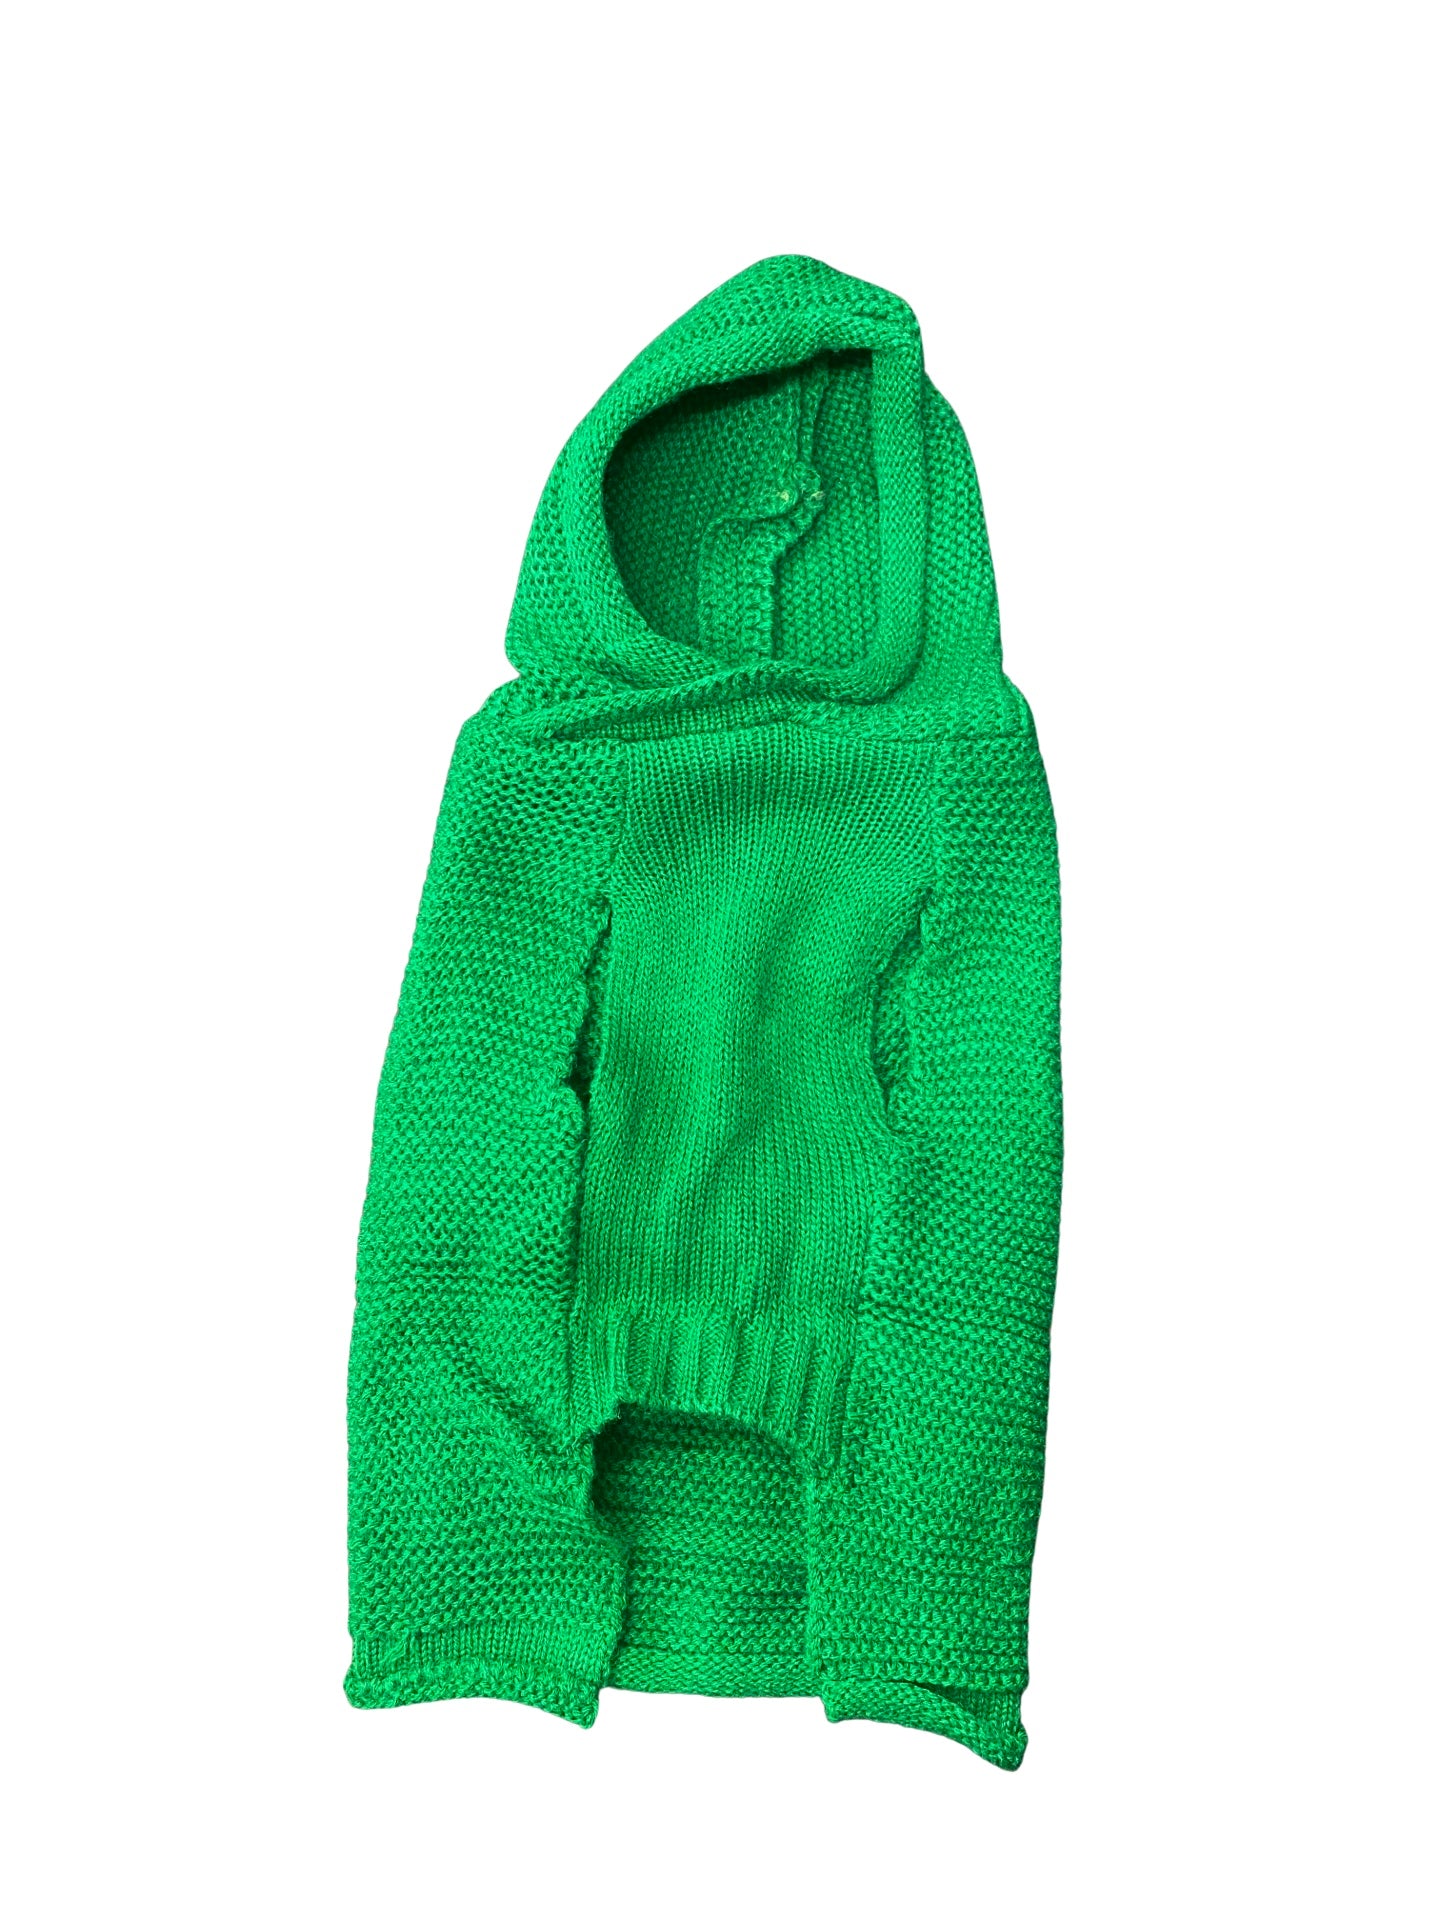 Knit Pet Sweater- Green